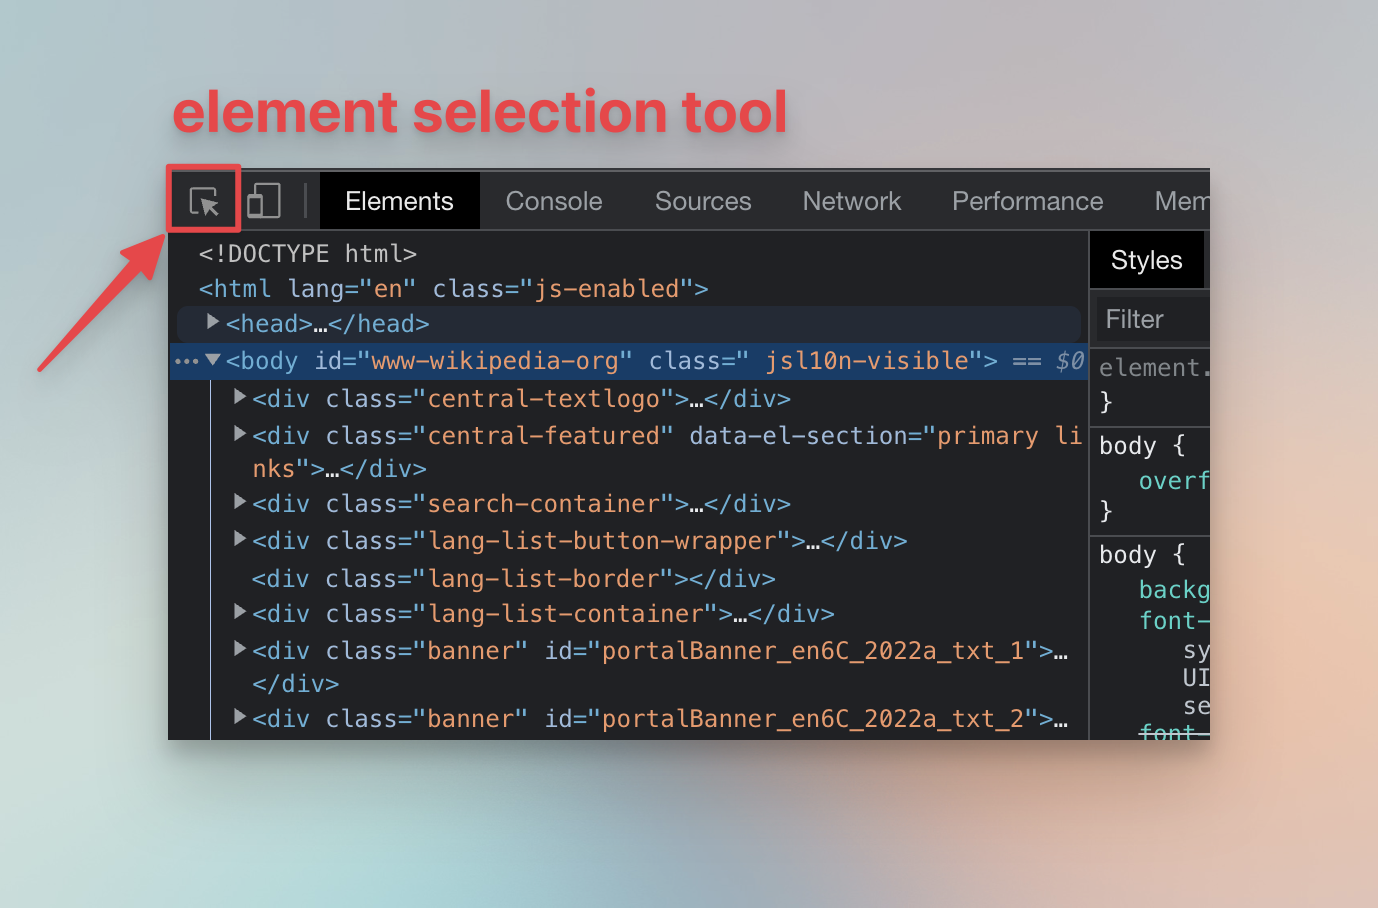 Chrome DevTools element selection tool